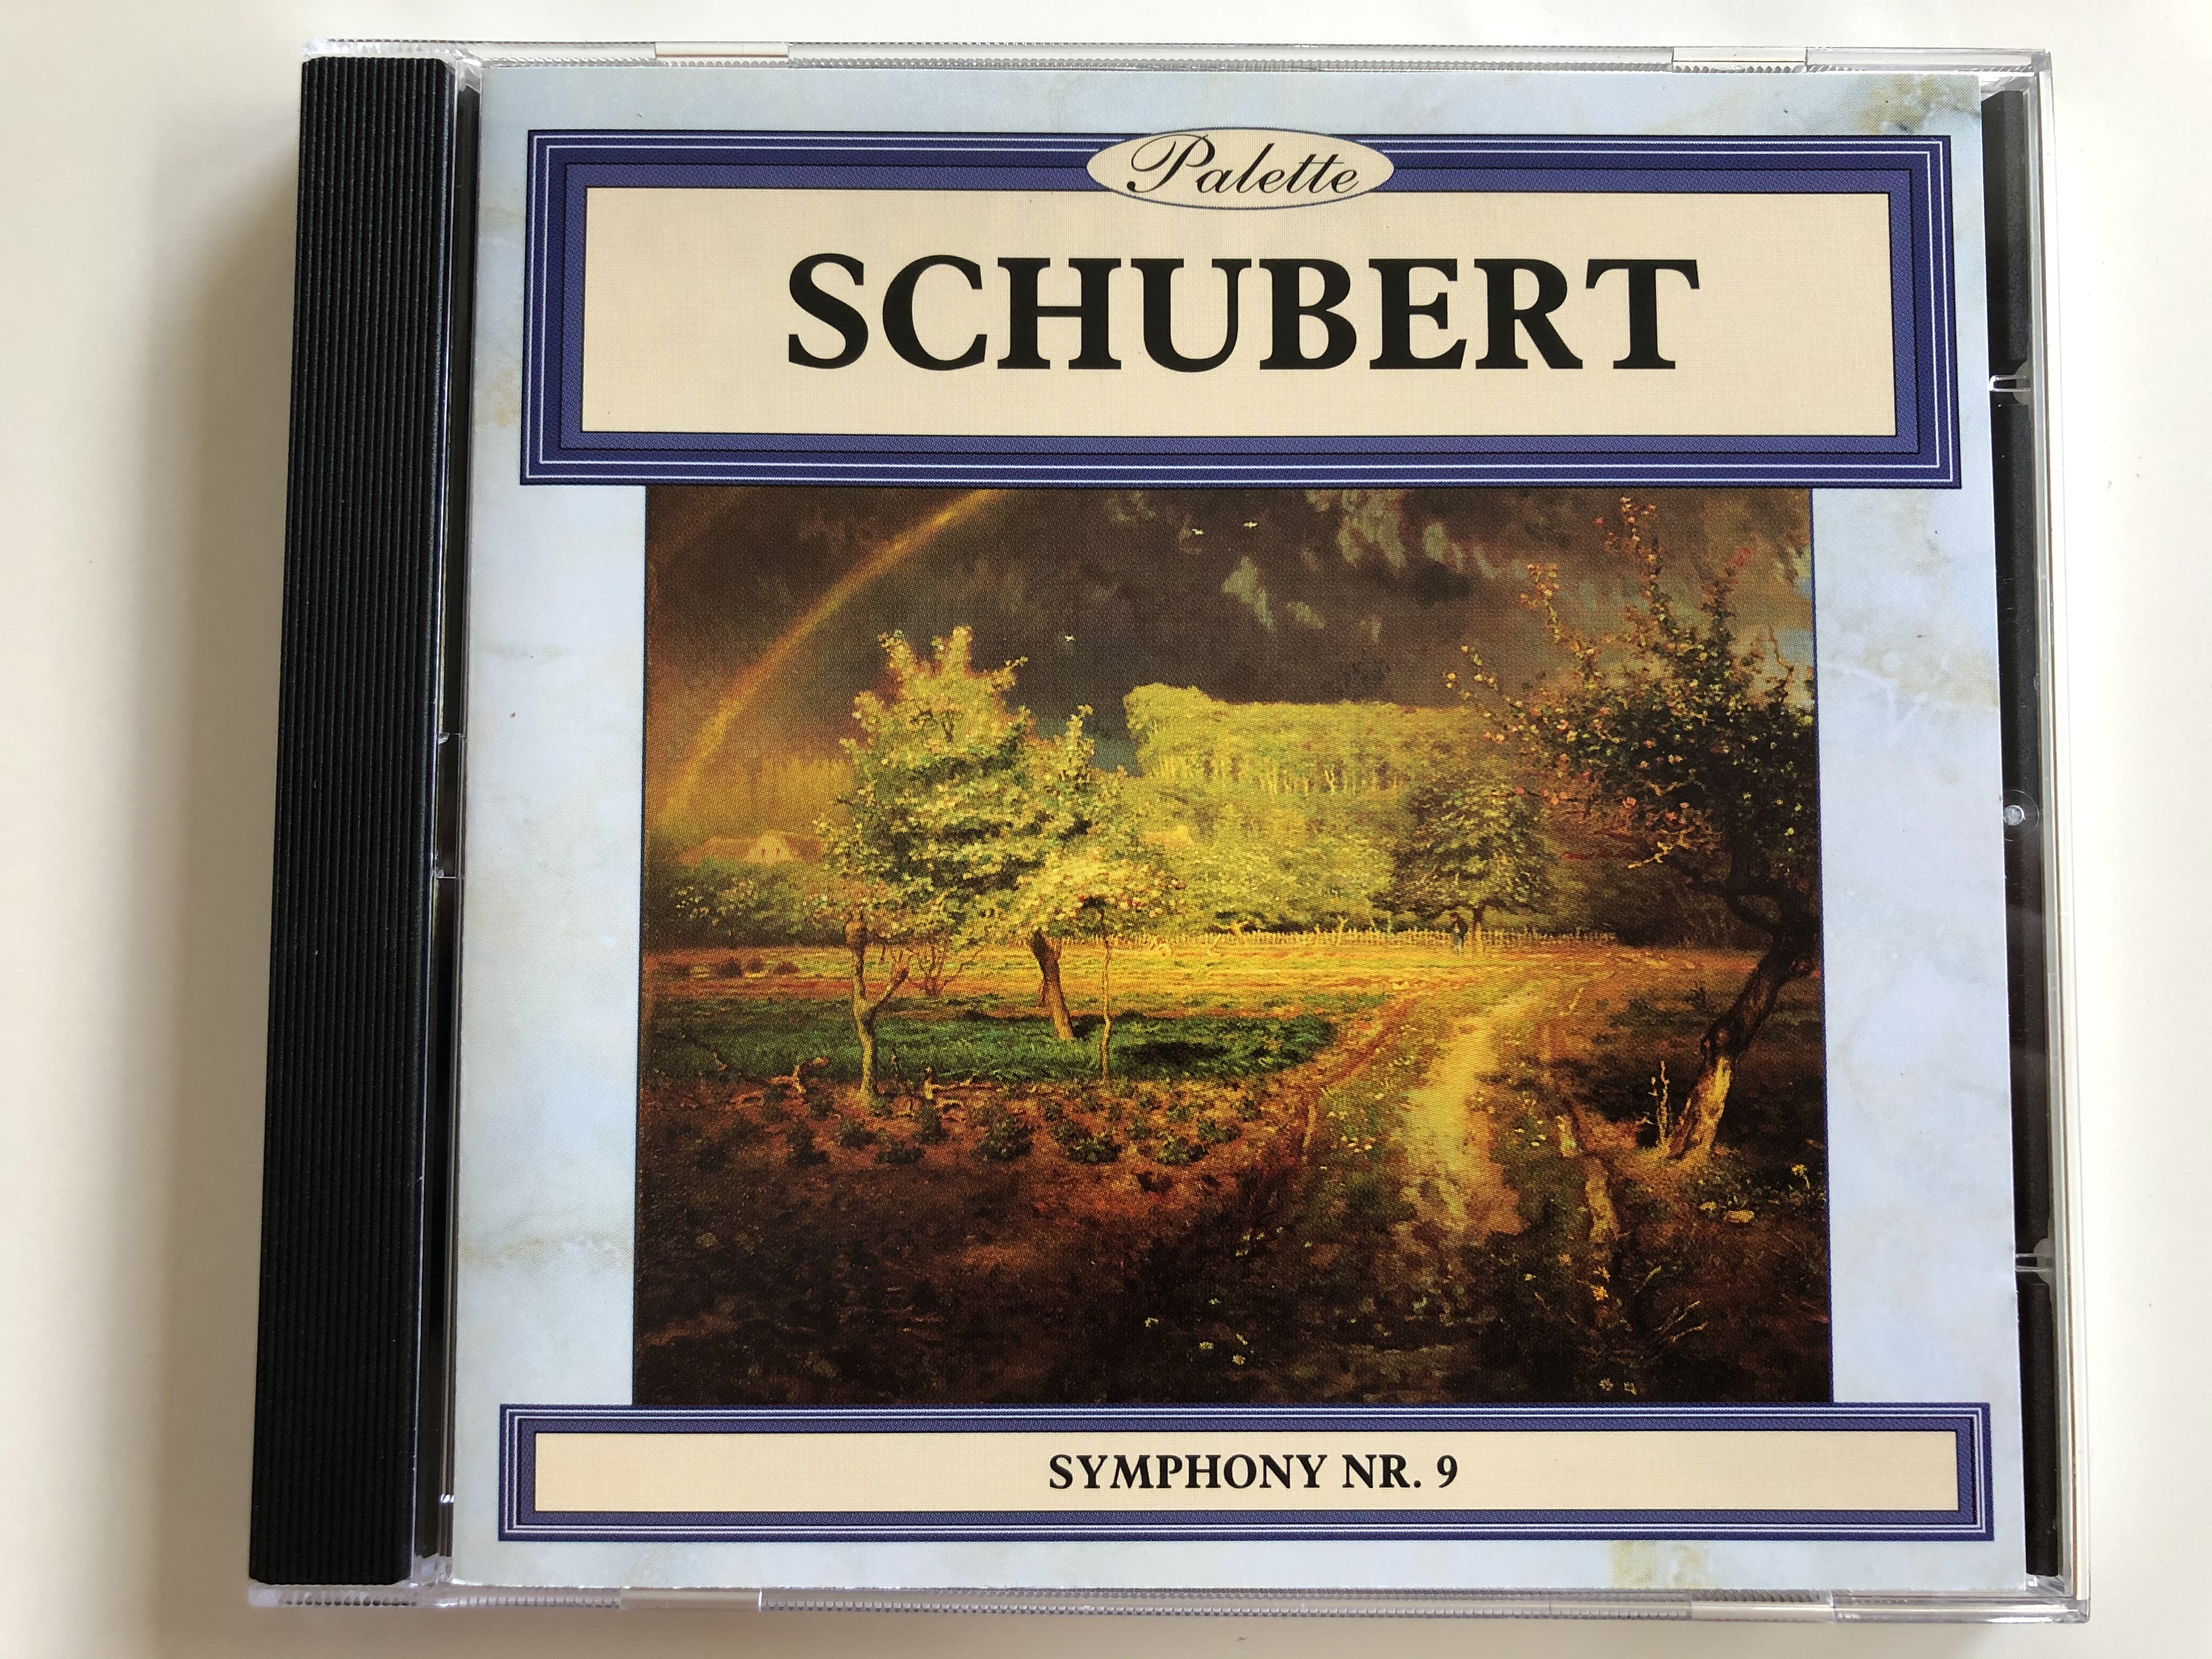 schubert-symphony-nr.-9-palette-audio-cd-1996-pal057-1-.jpg